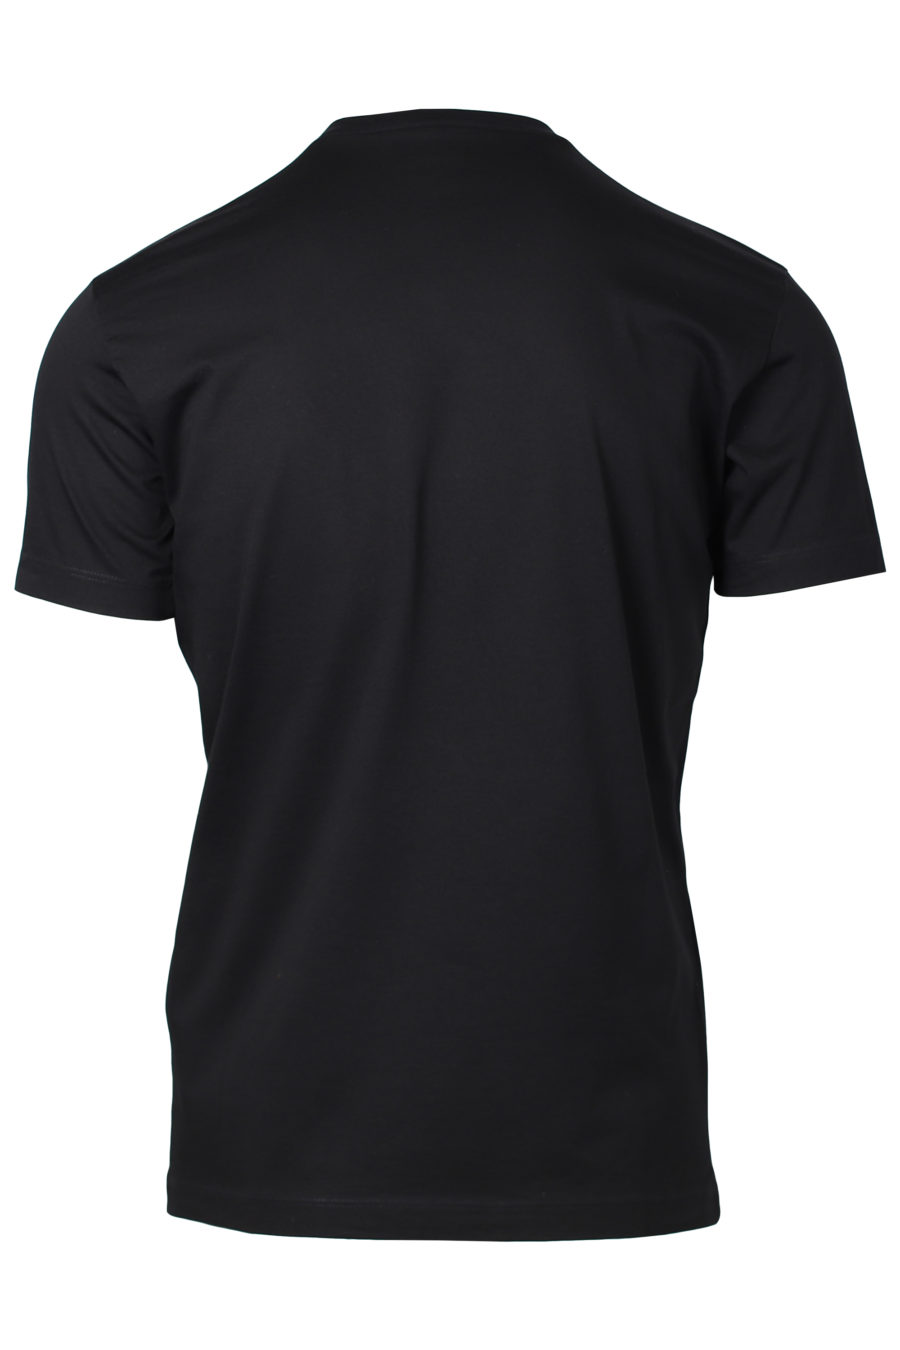 Black T-shirt with leaf print - IMG 2219